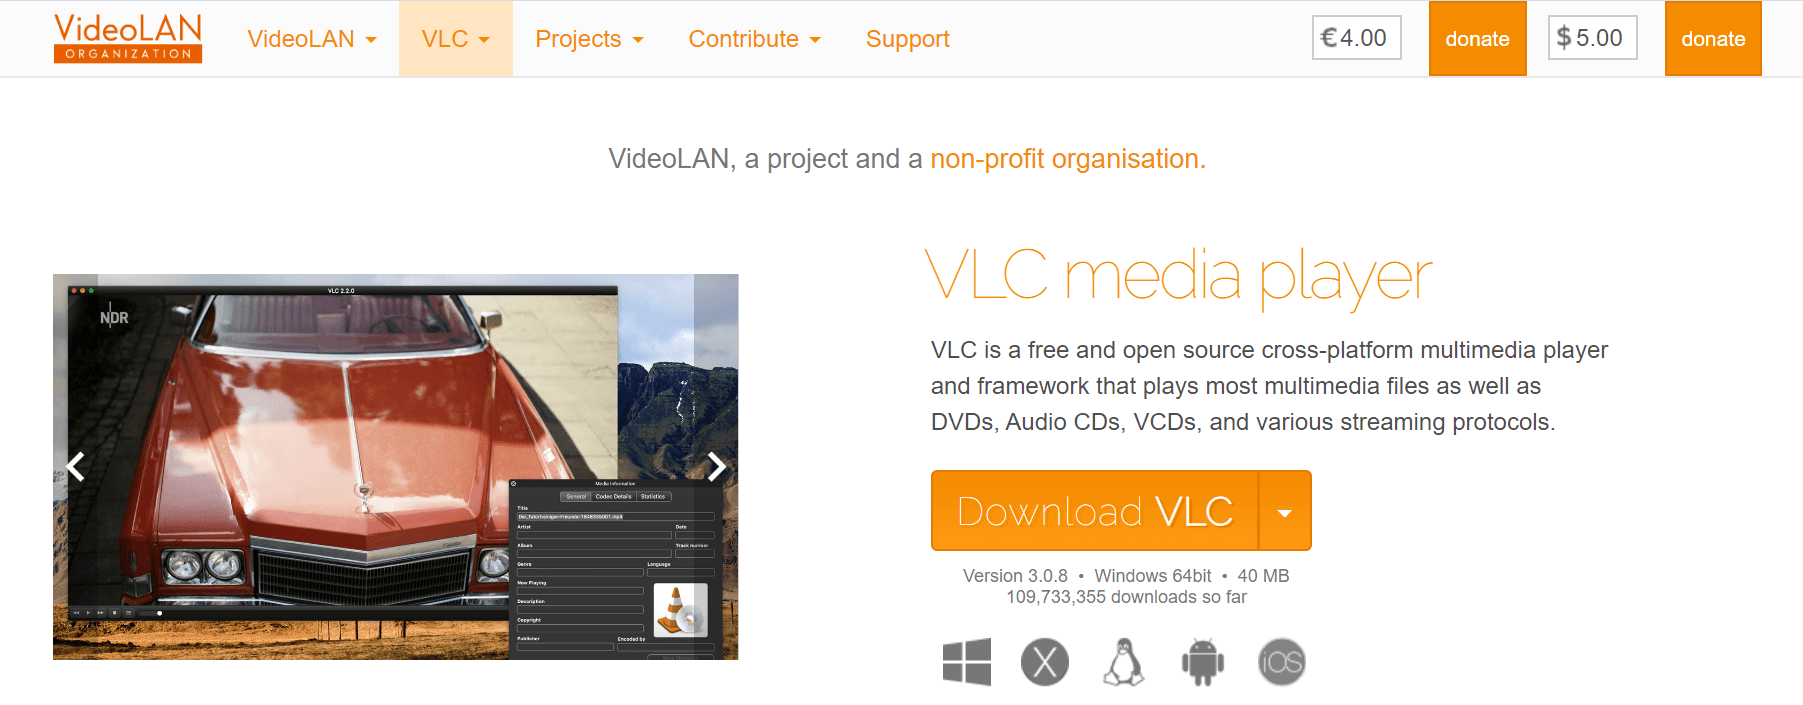 VLC Media Player "